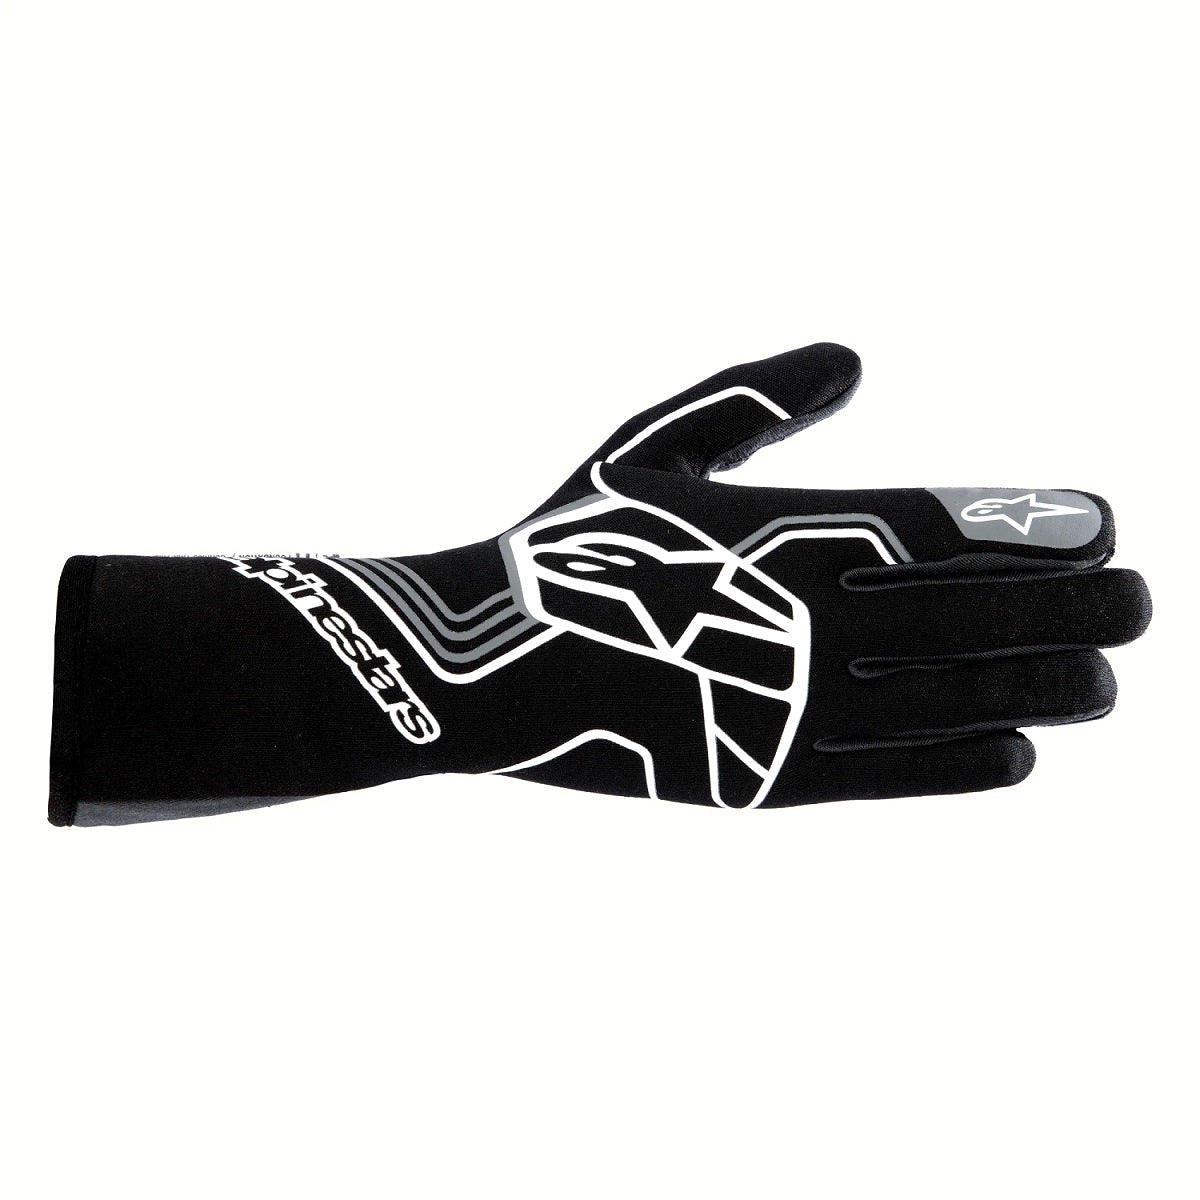 Alpinestars Glove Tech-1 Race V4 Black / Gray Large Safety Clothing Driving Gloves main image